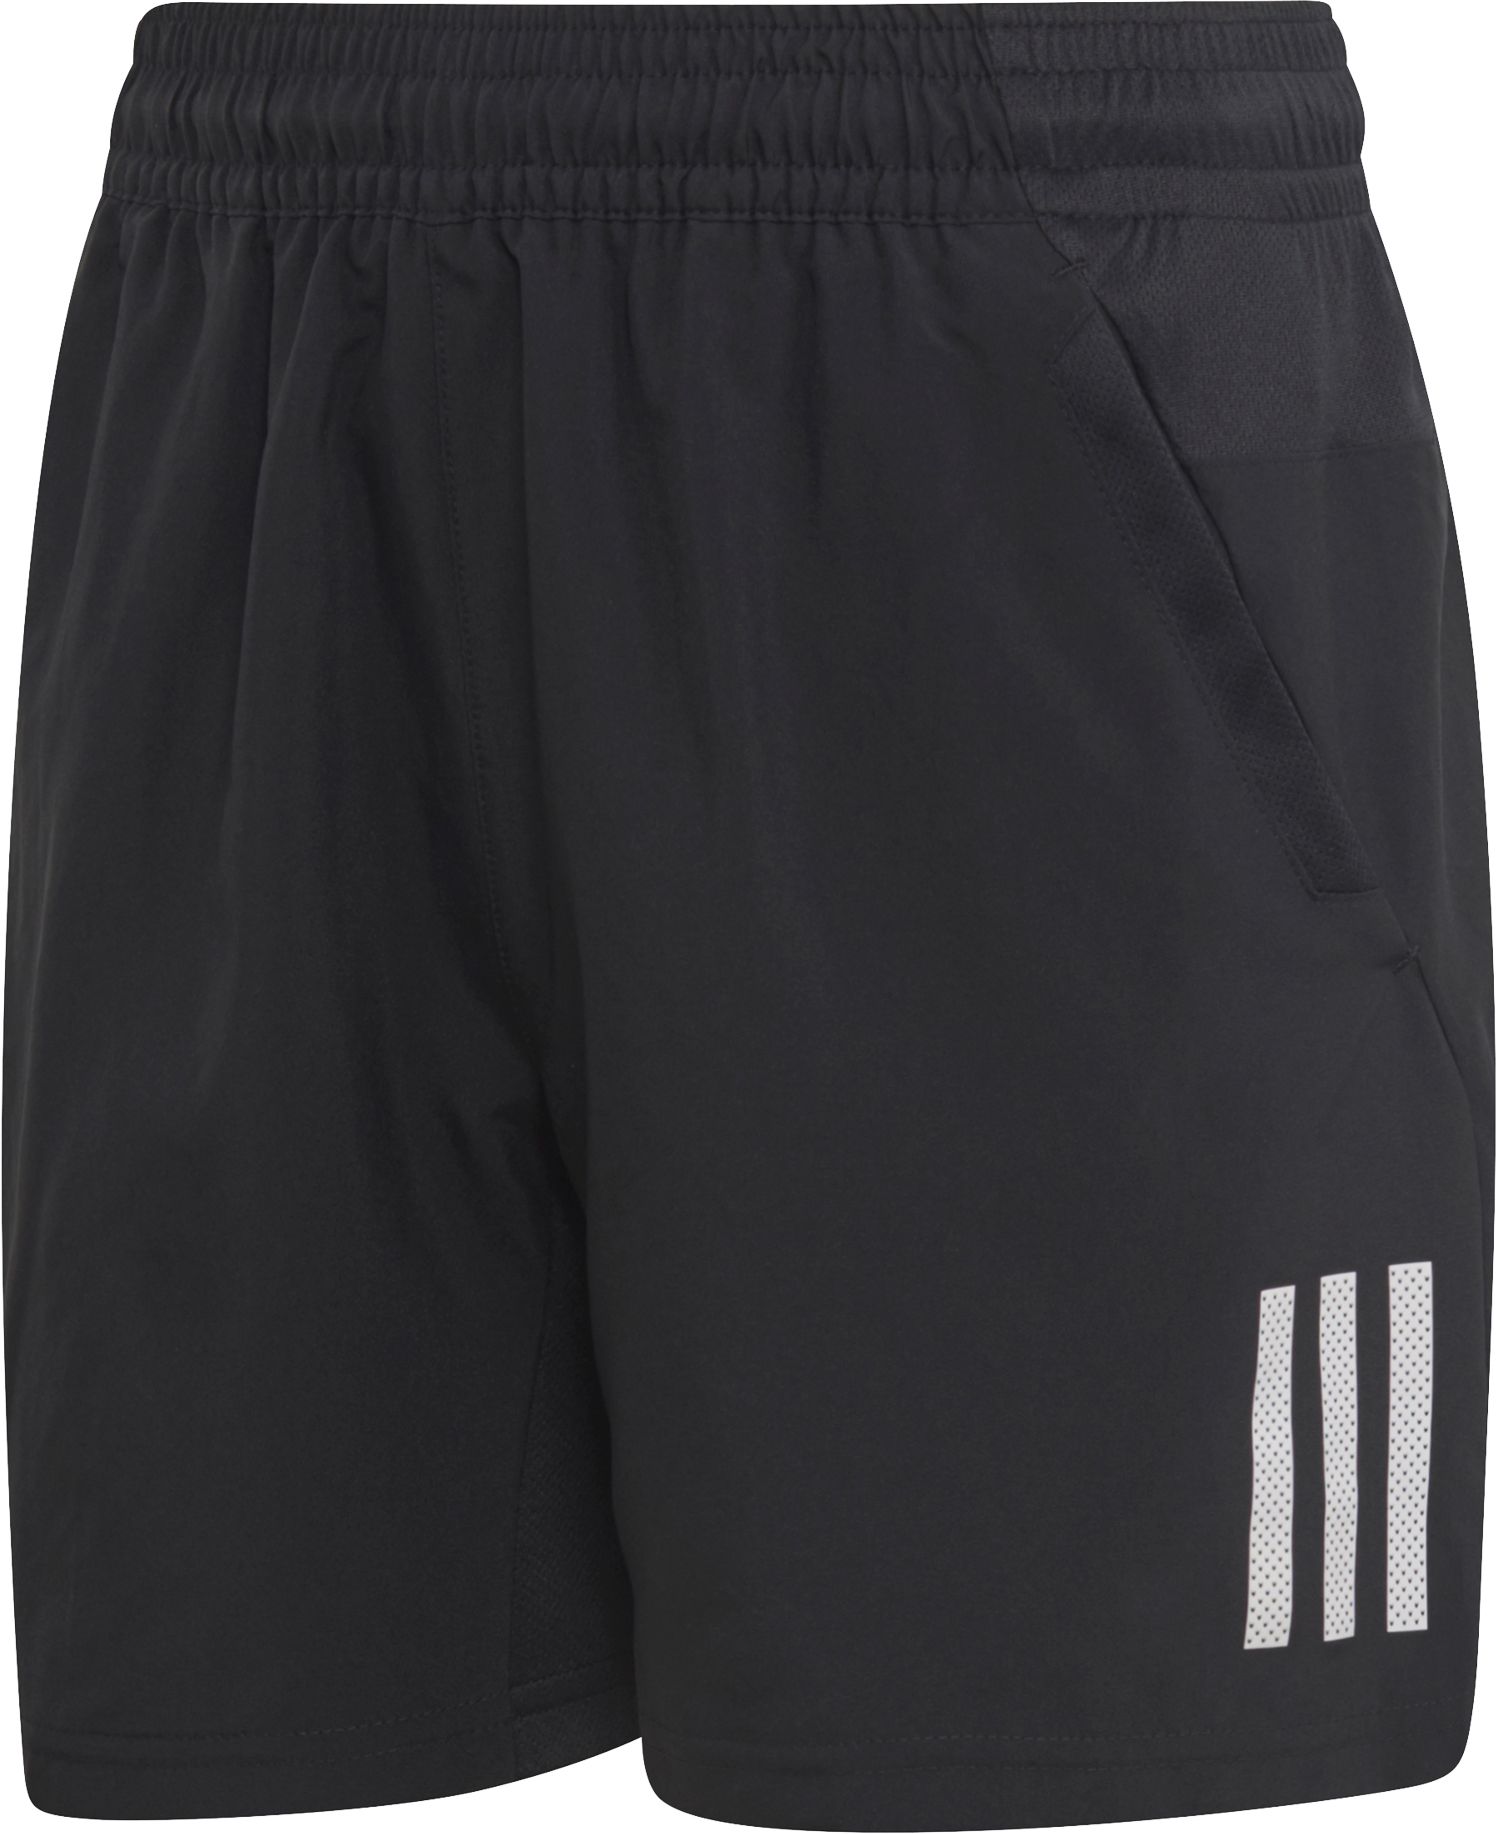 adidas tennis shorts